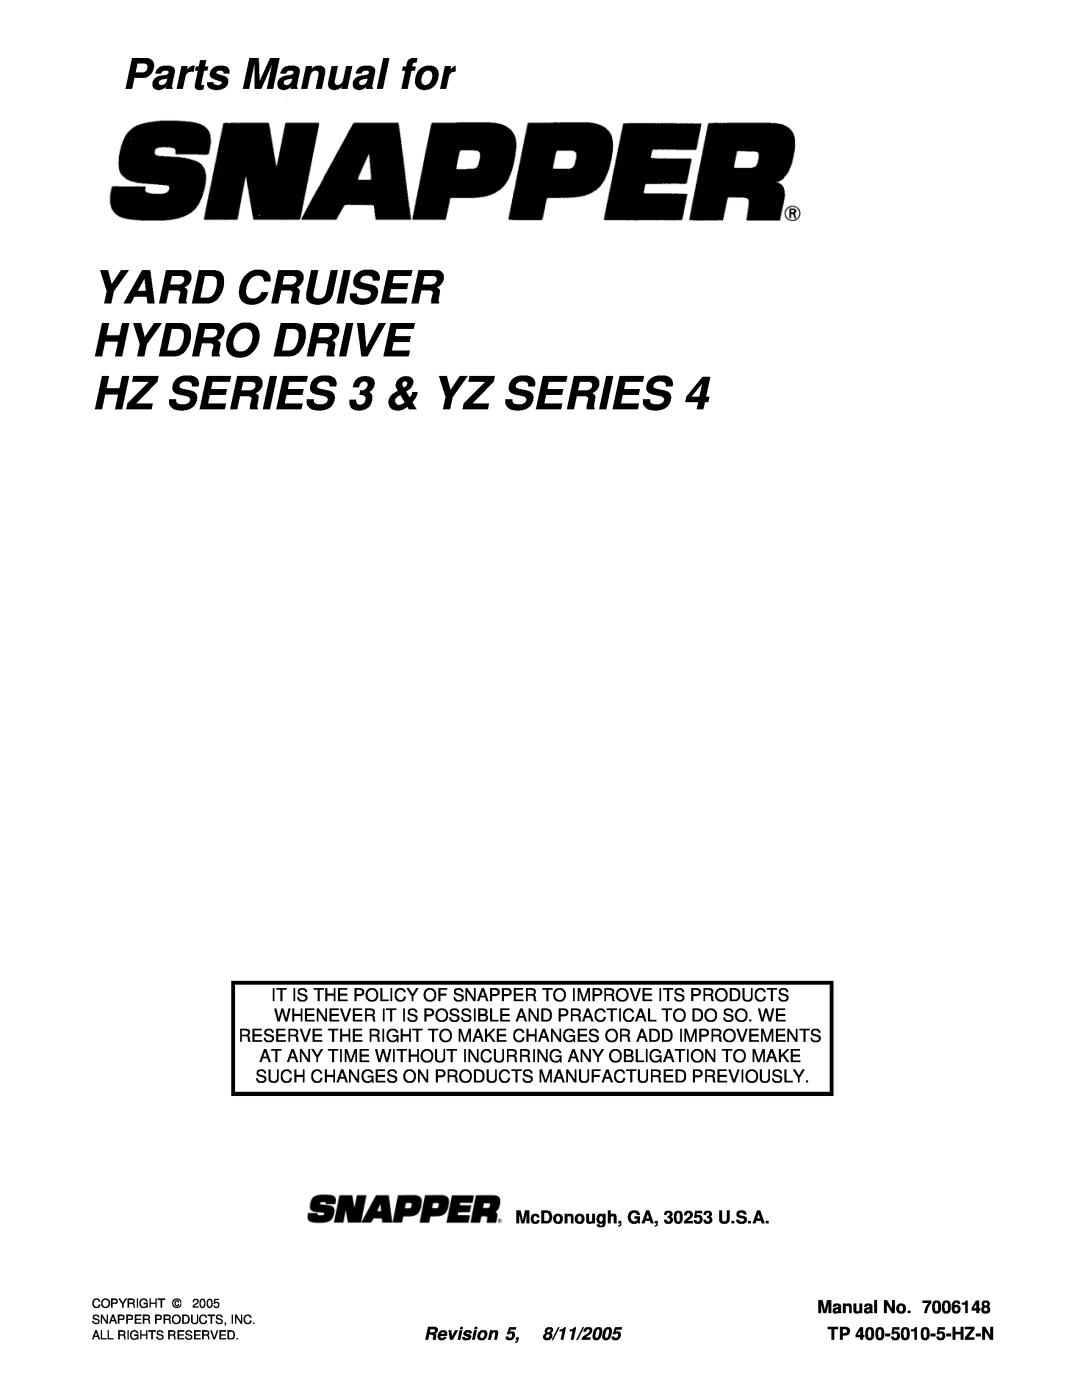 Snapper HZS18483BVE manual YARD CRUISER HYDRO DRIVE HZ SERIES 3 & YZ SERIES, Parts Manual for, McDonough, GA, 30253 U.S.A 